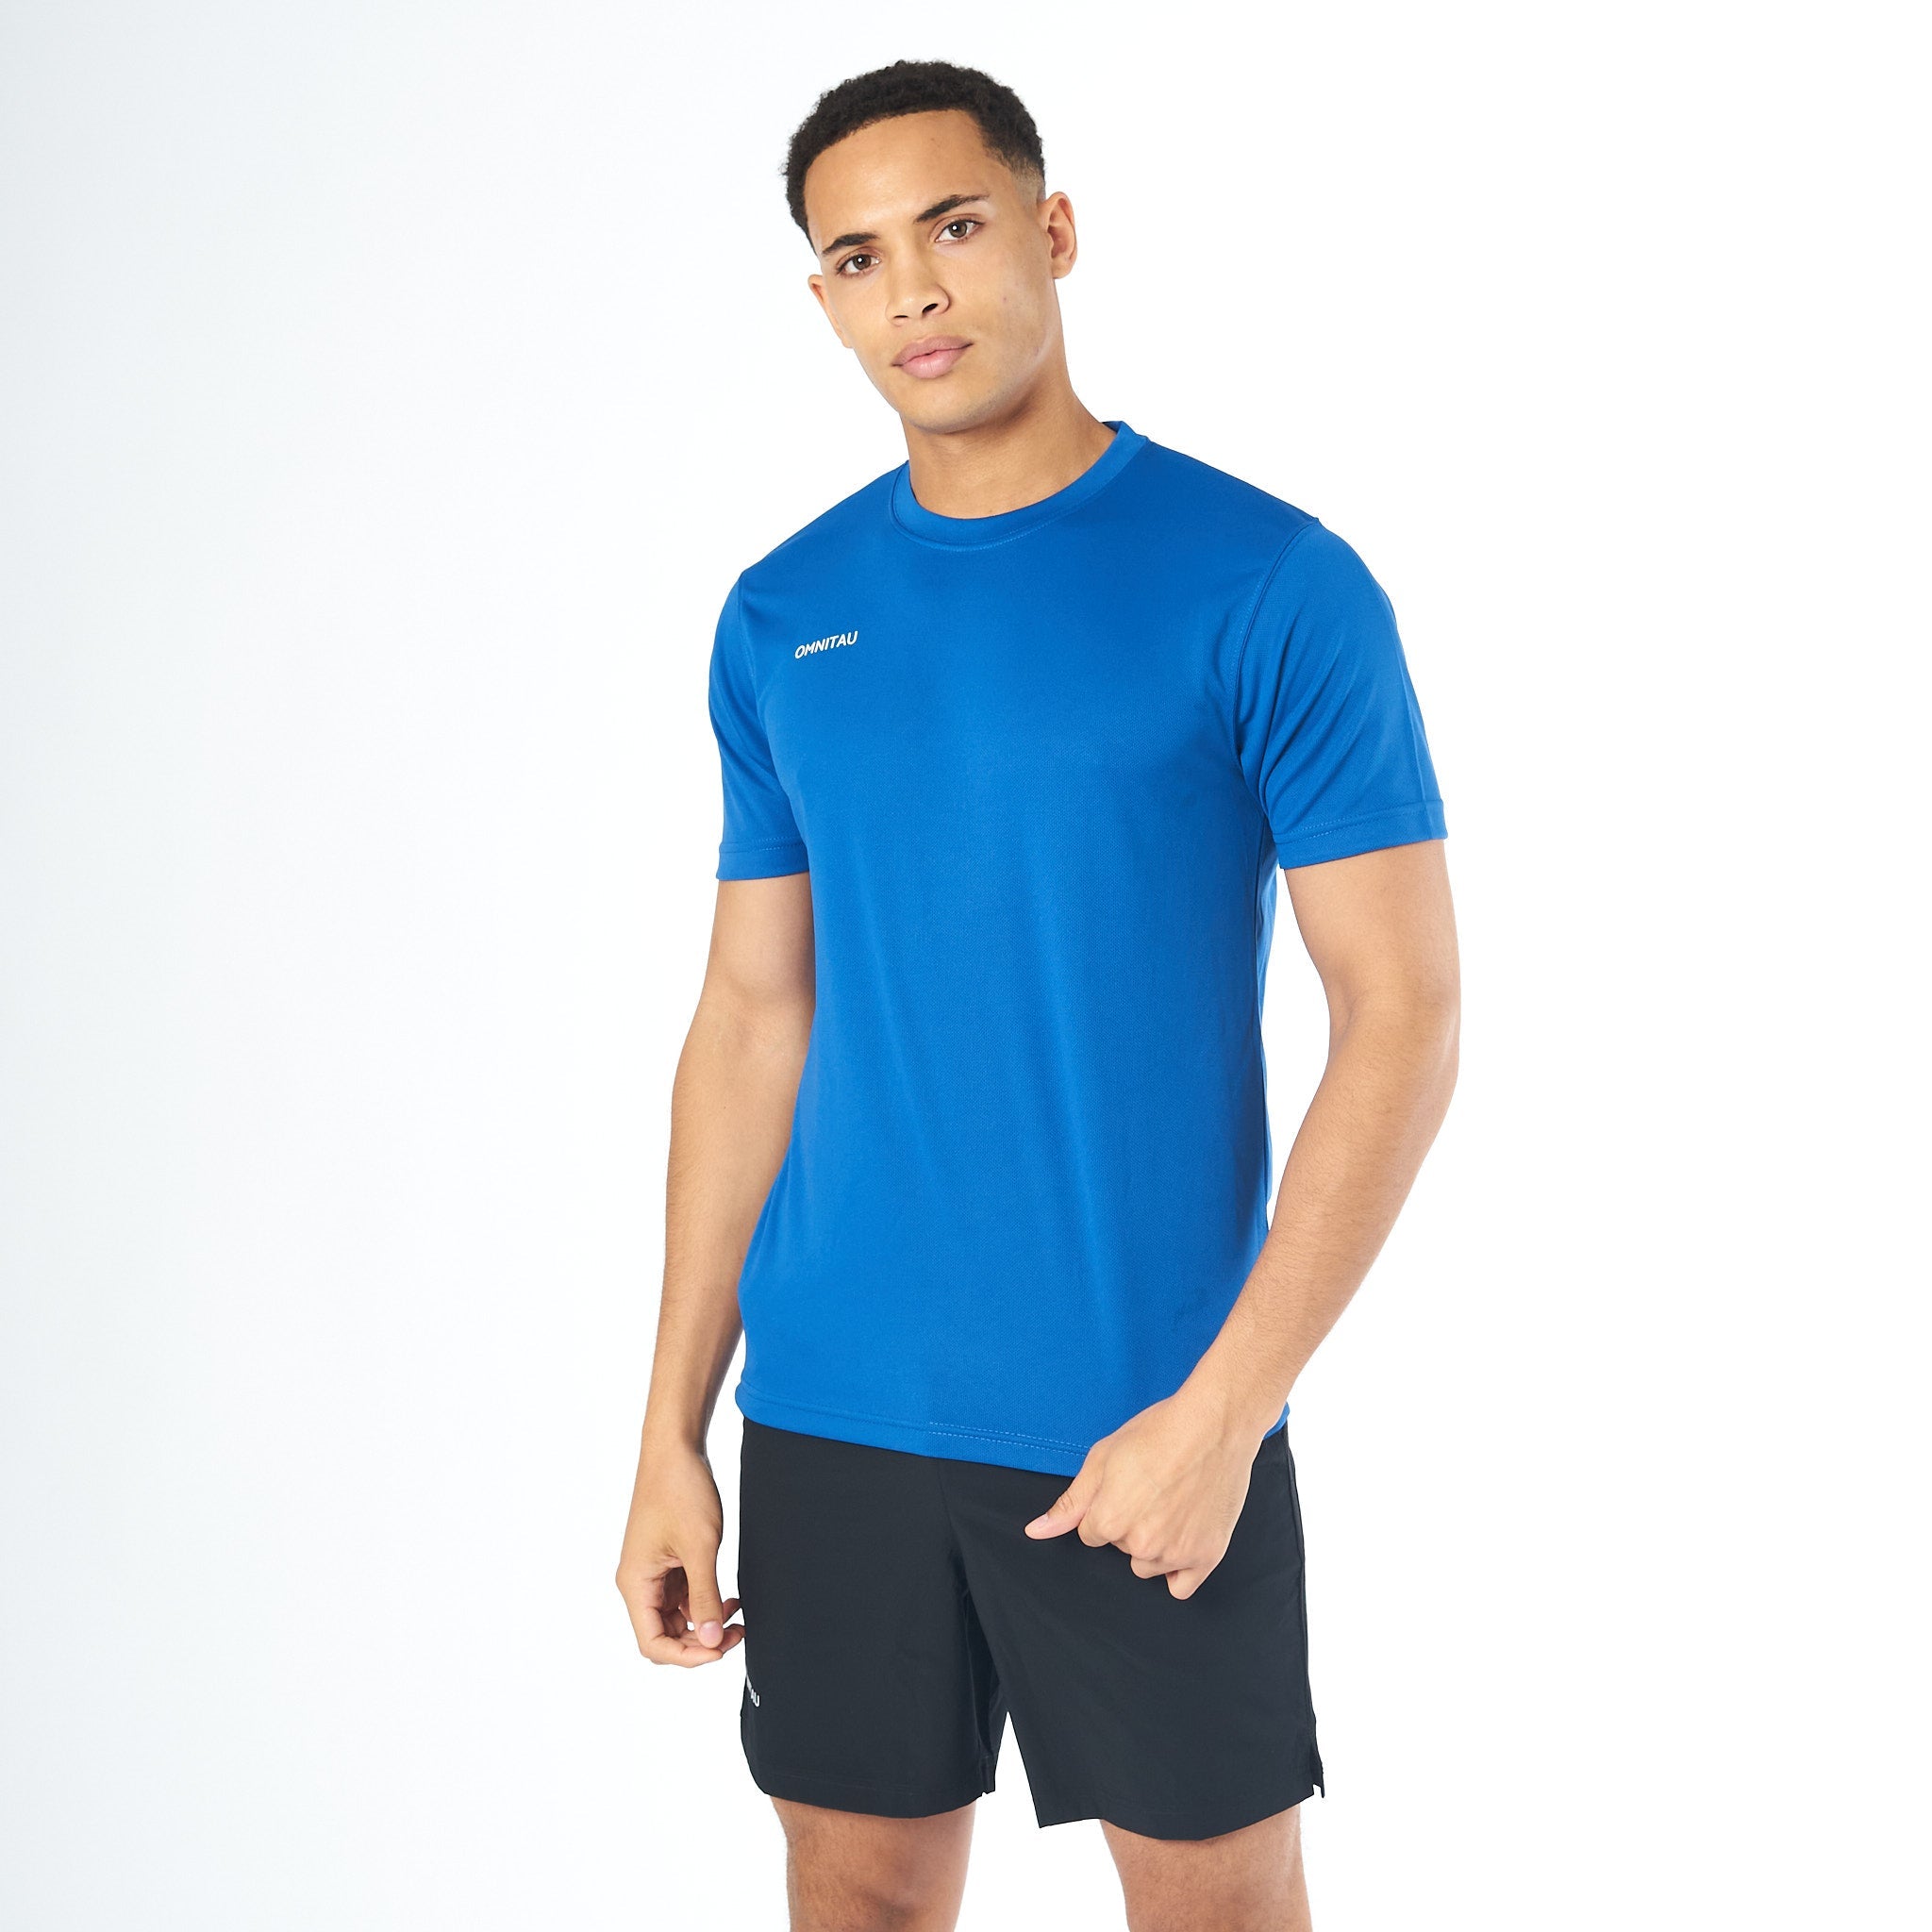 Omnitau Men's Team Sports Core Football Shirt- Royal Blue